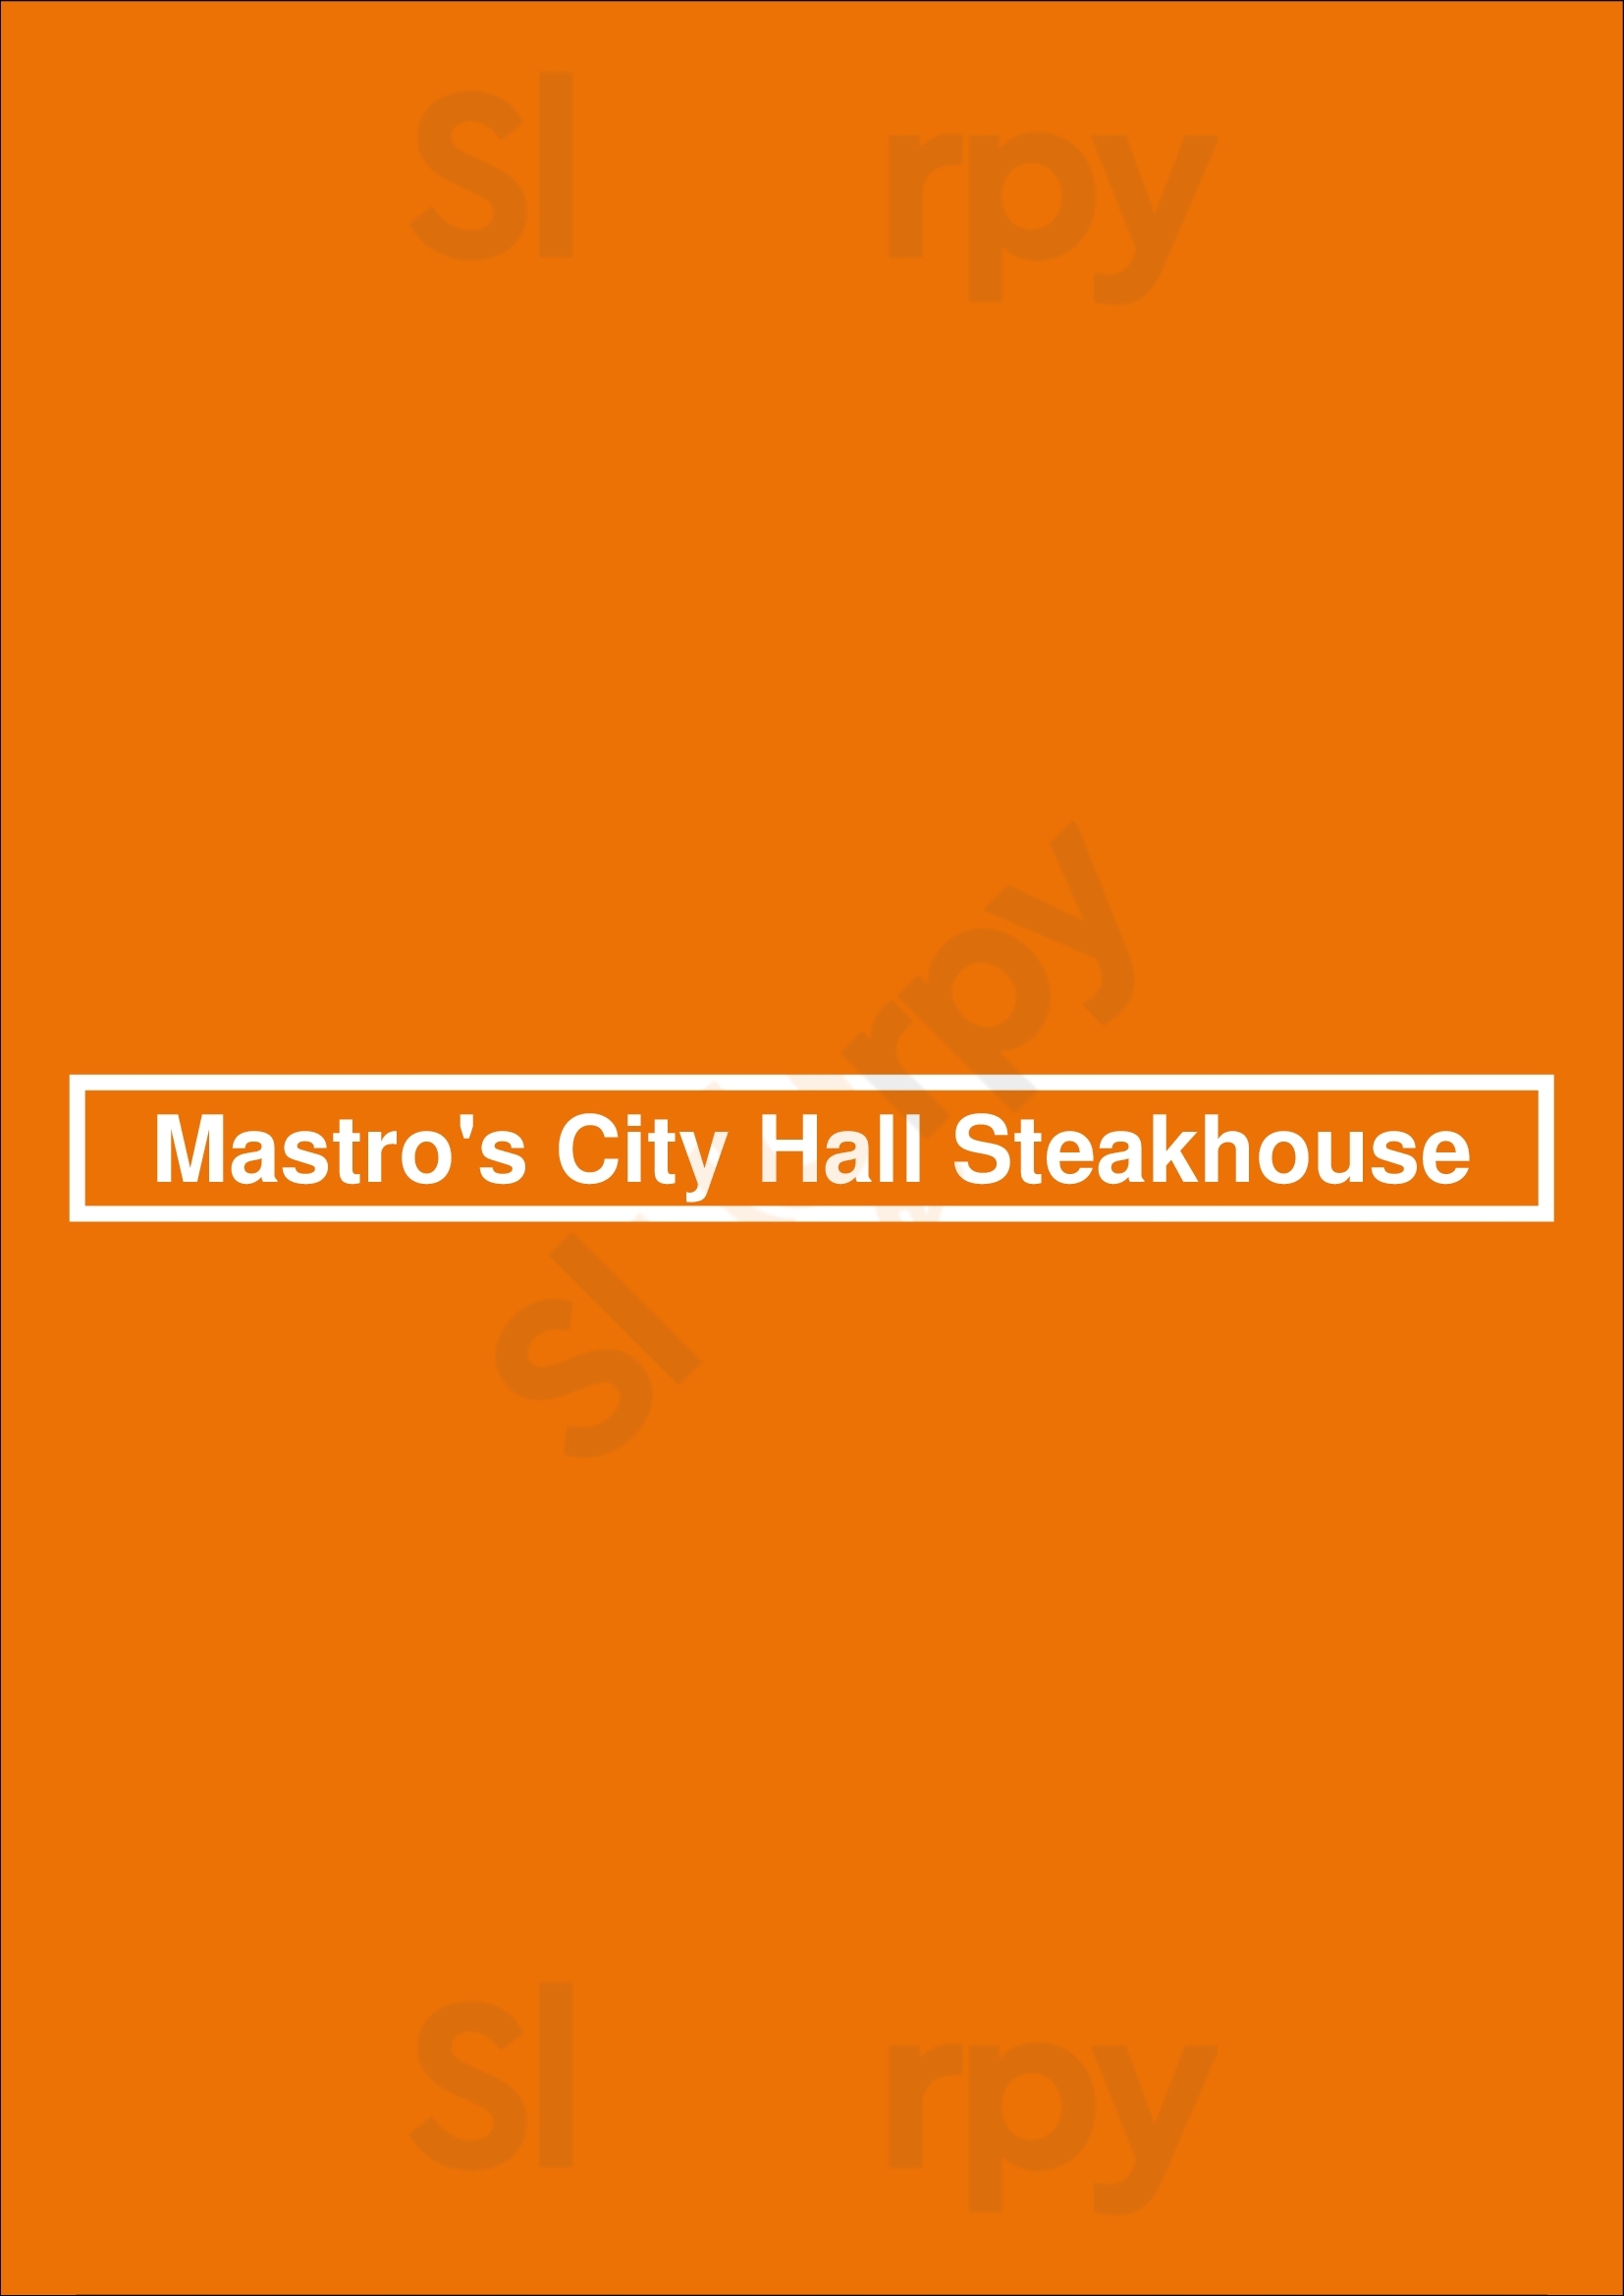 Mastro's City Hall Steakhouse Scottsdale Menu - 1